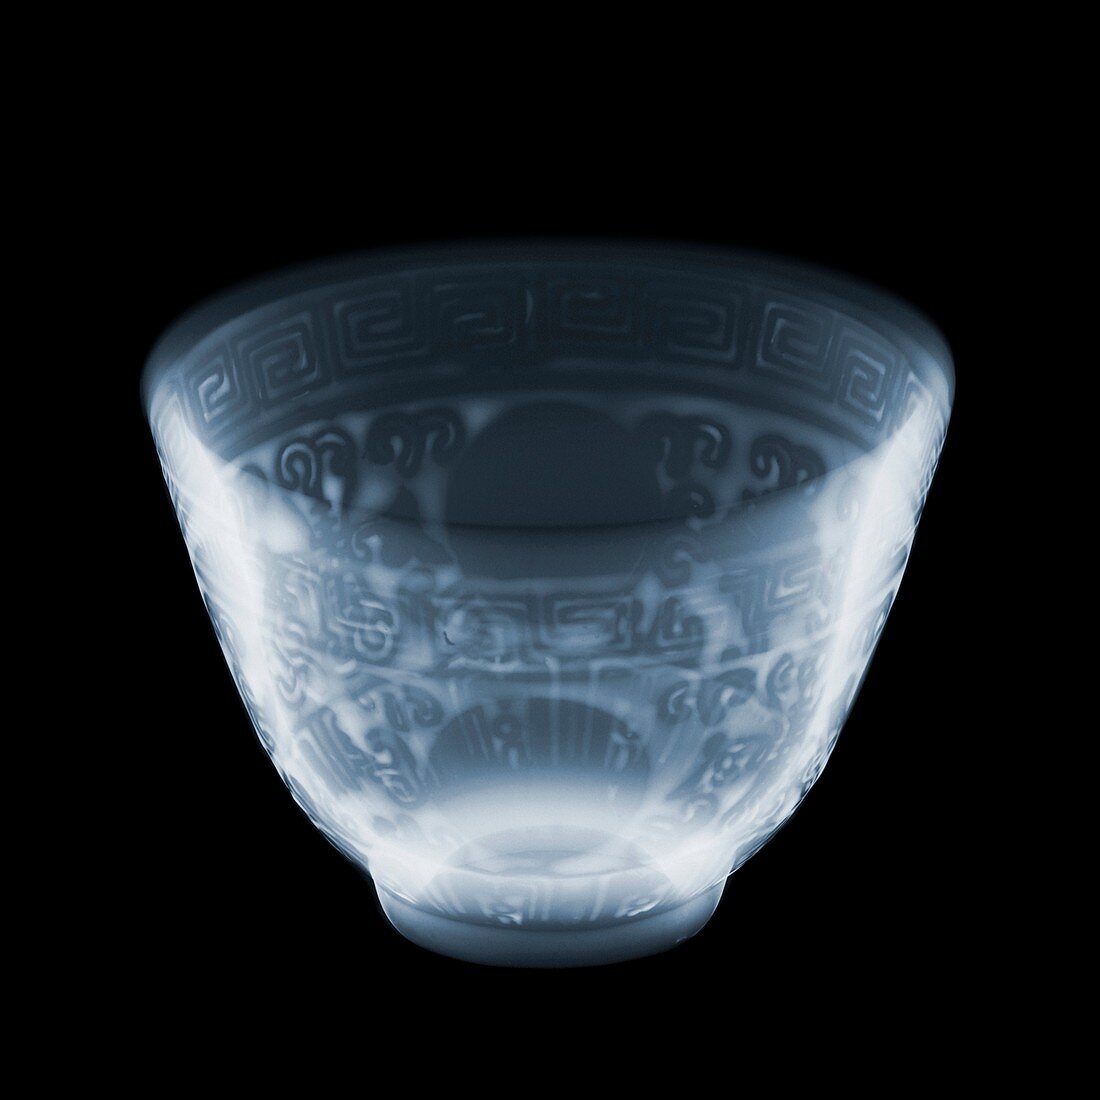 Chinese bowl, X-ray